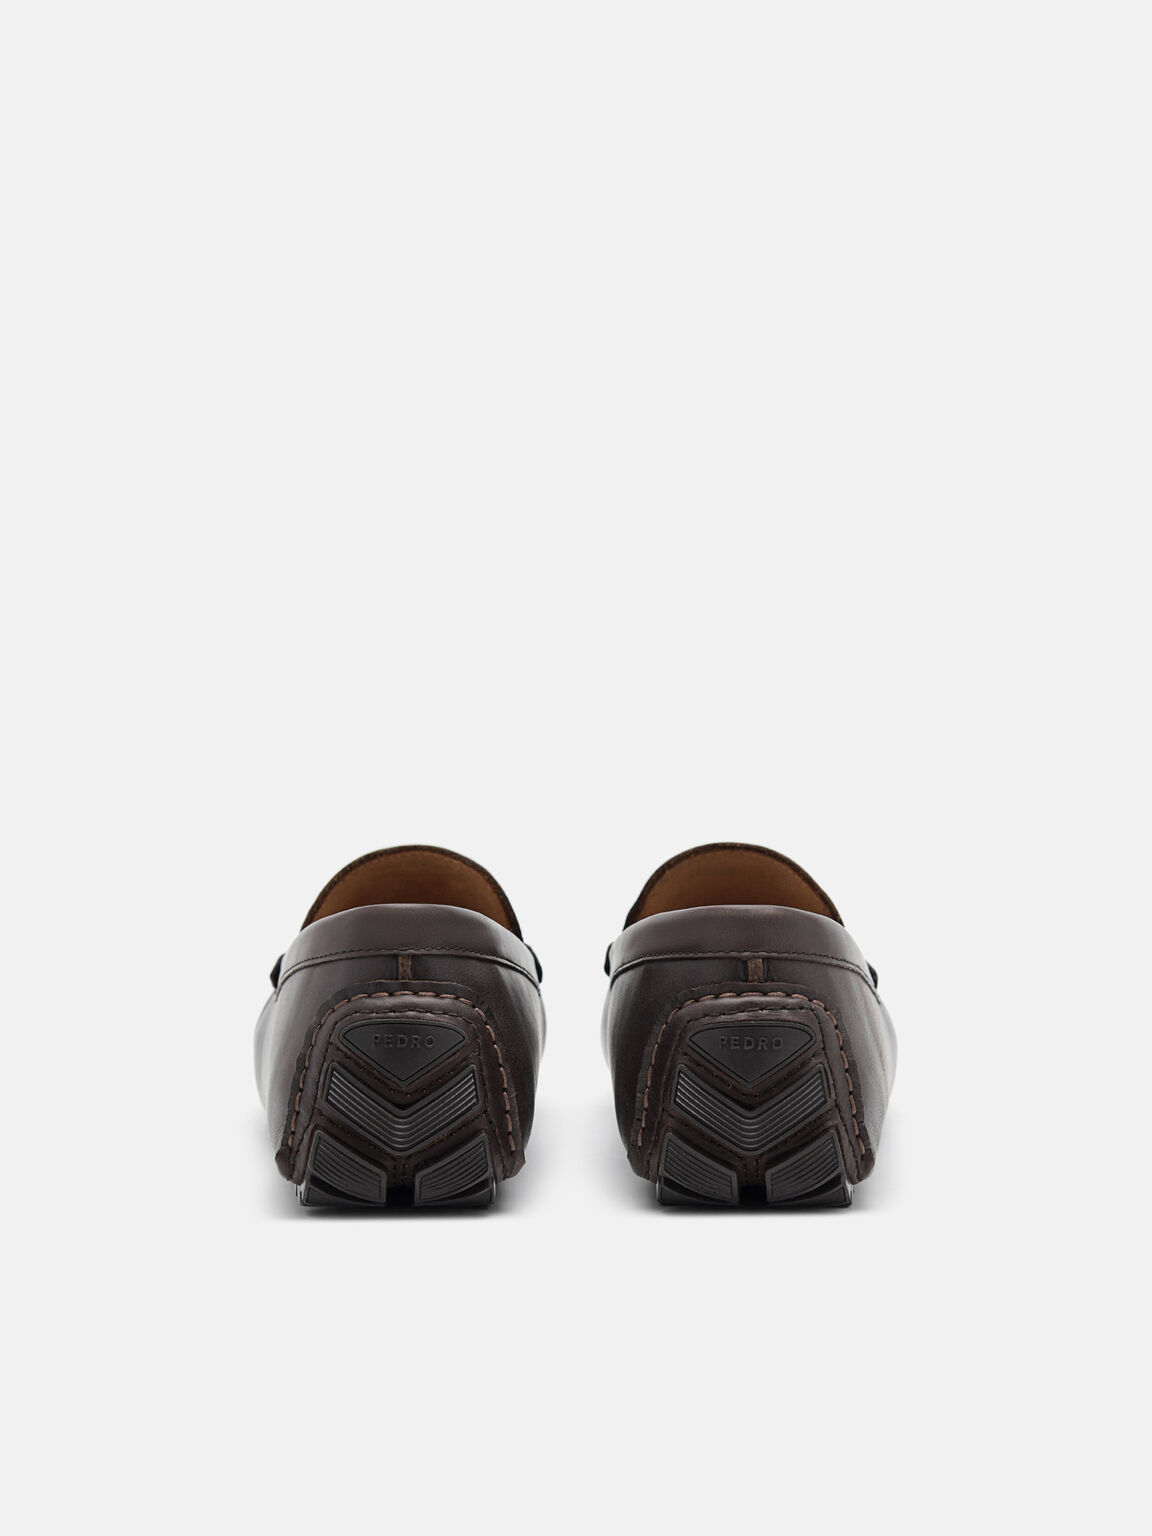 Robert Leather Driving Shoes, Dark Brown, hi-res